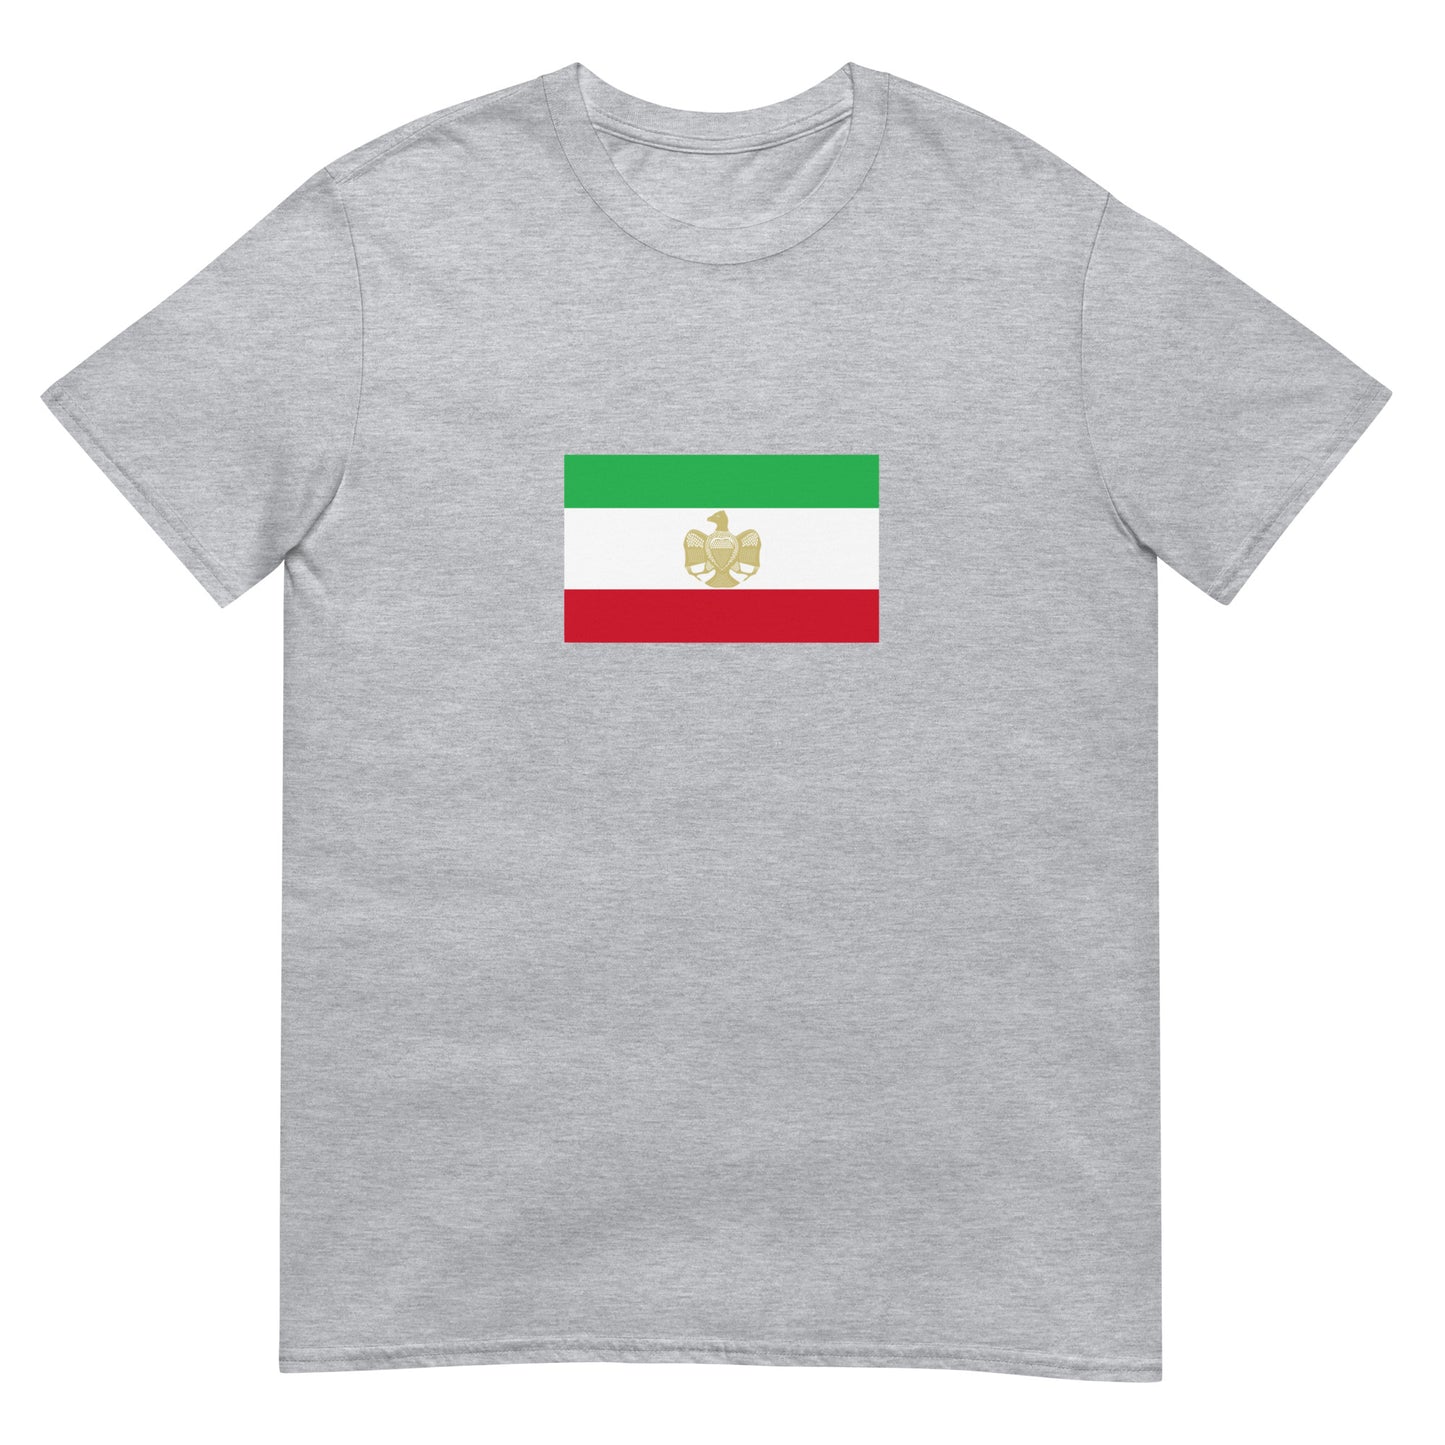 Serbia - Ashkali and Balkan Egyptians | Ethnic Flag Short-Sleeve Unisex T-Shirt